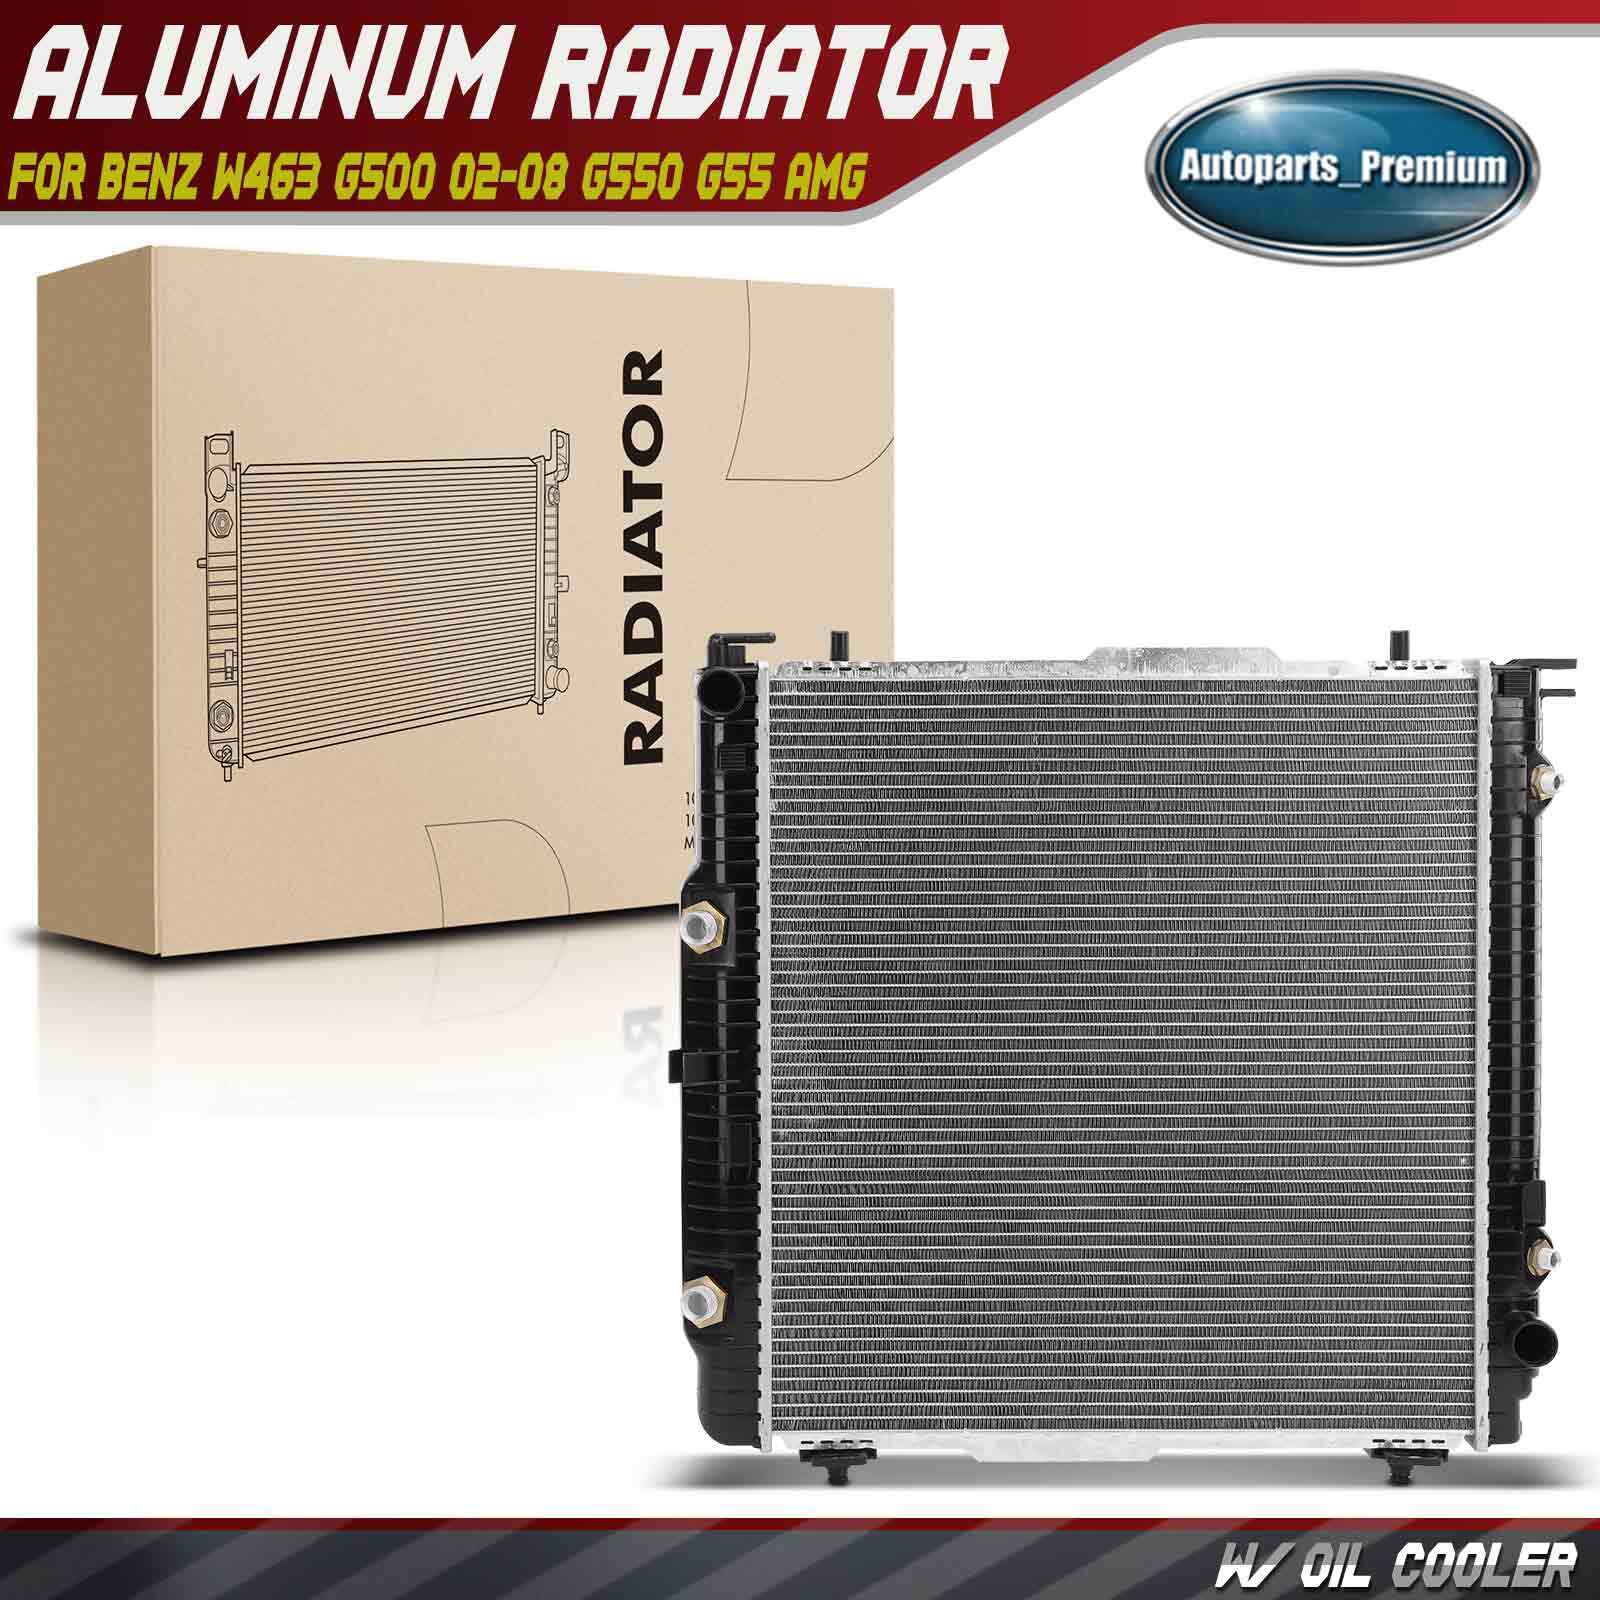 Aluminum Radiator w/ Oil Cooler for Mercedes-Benz W463 G500 02-08 G550 G55 AMG